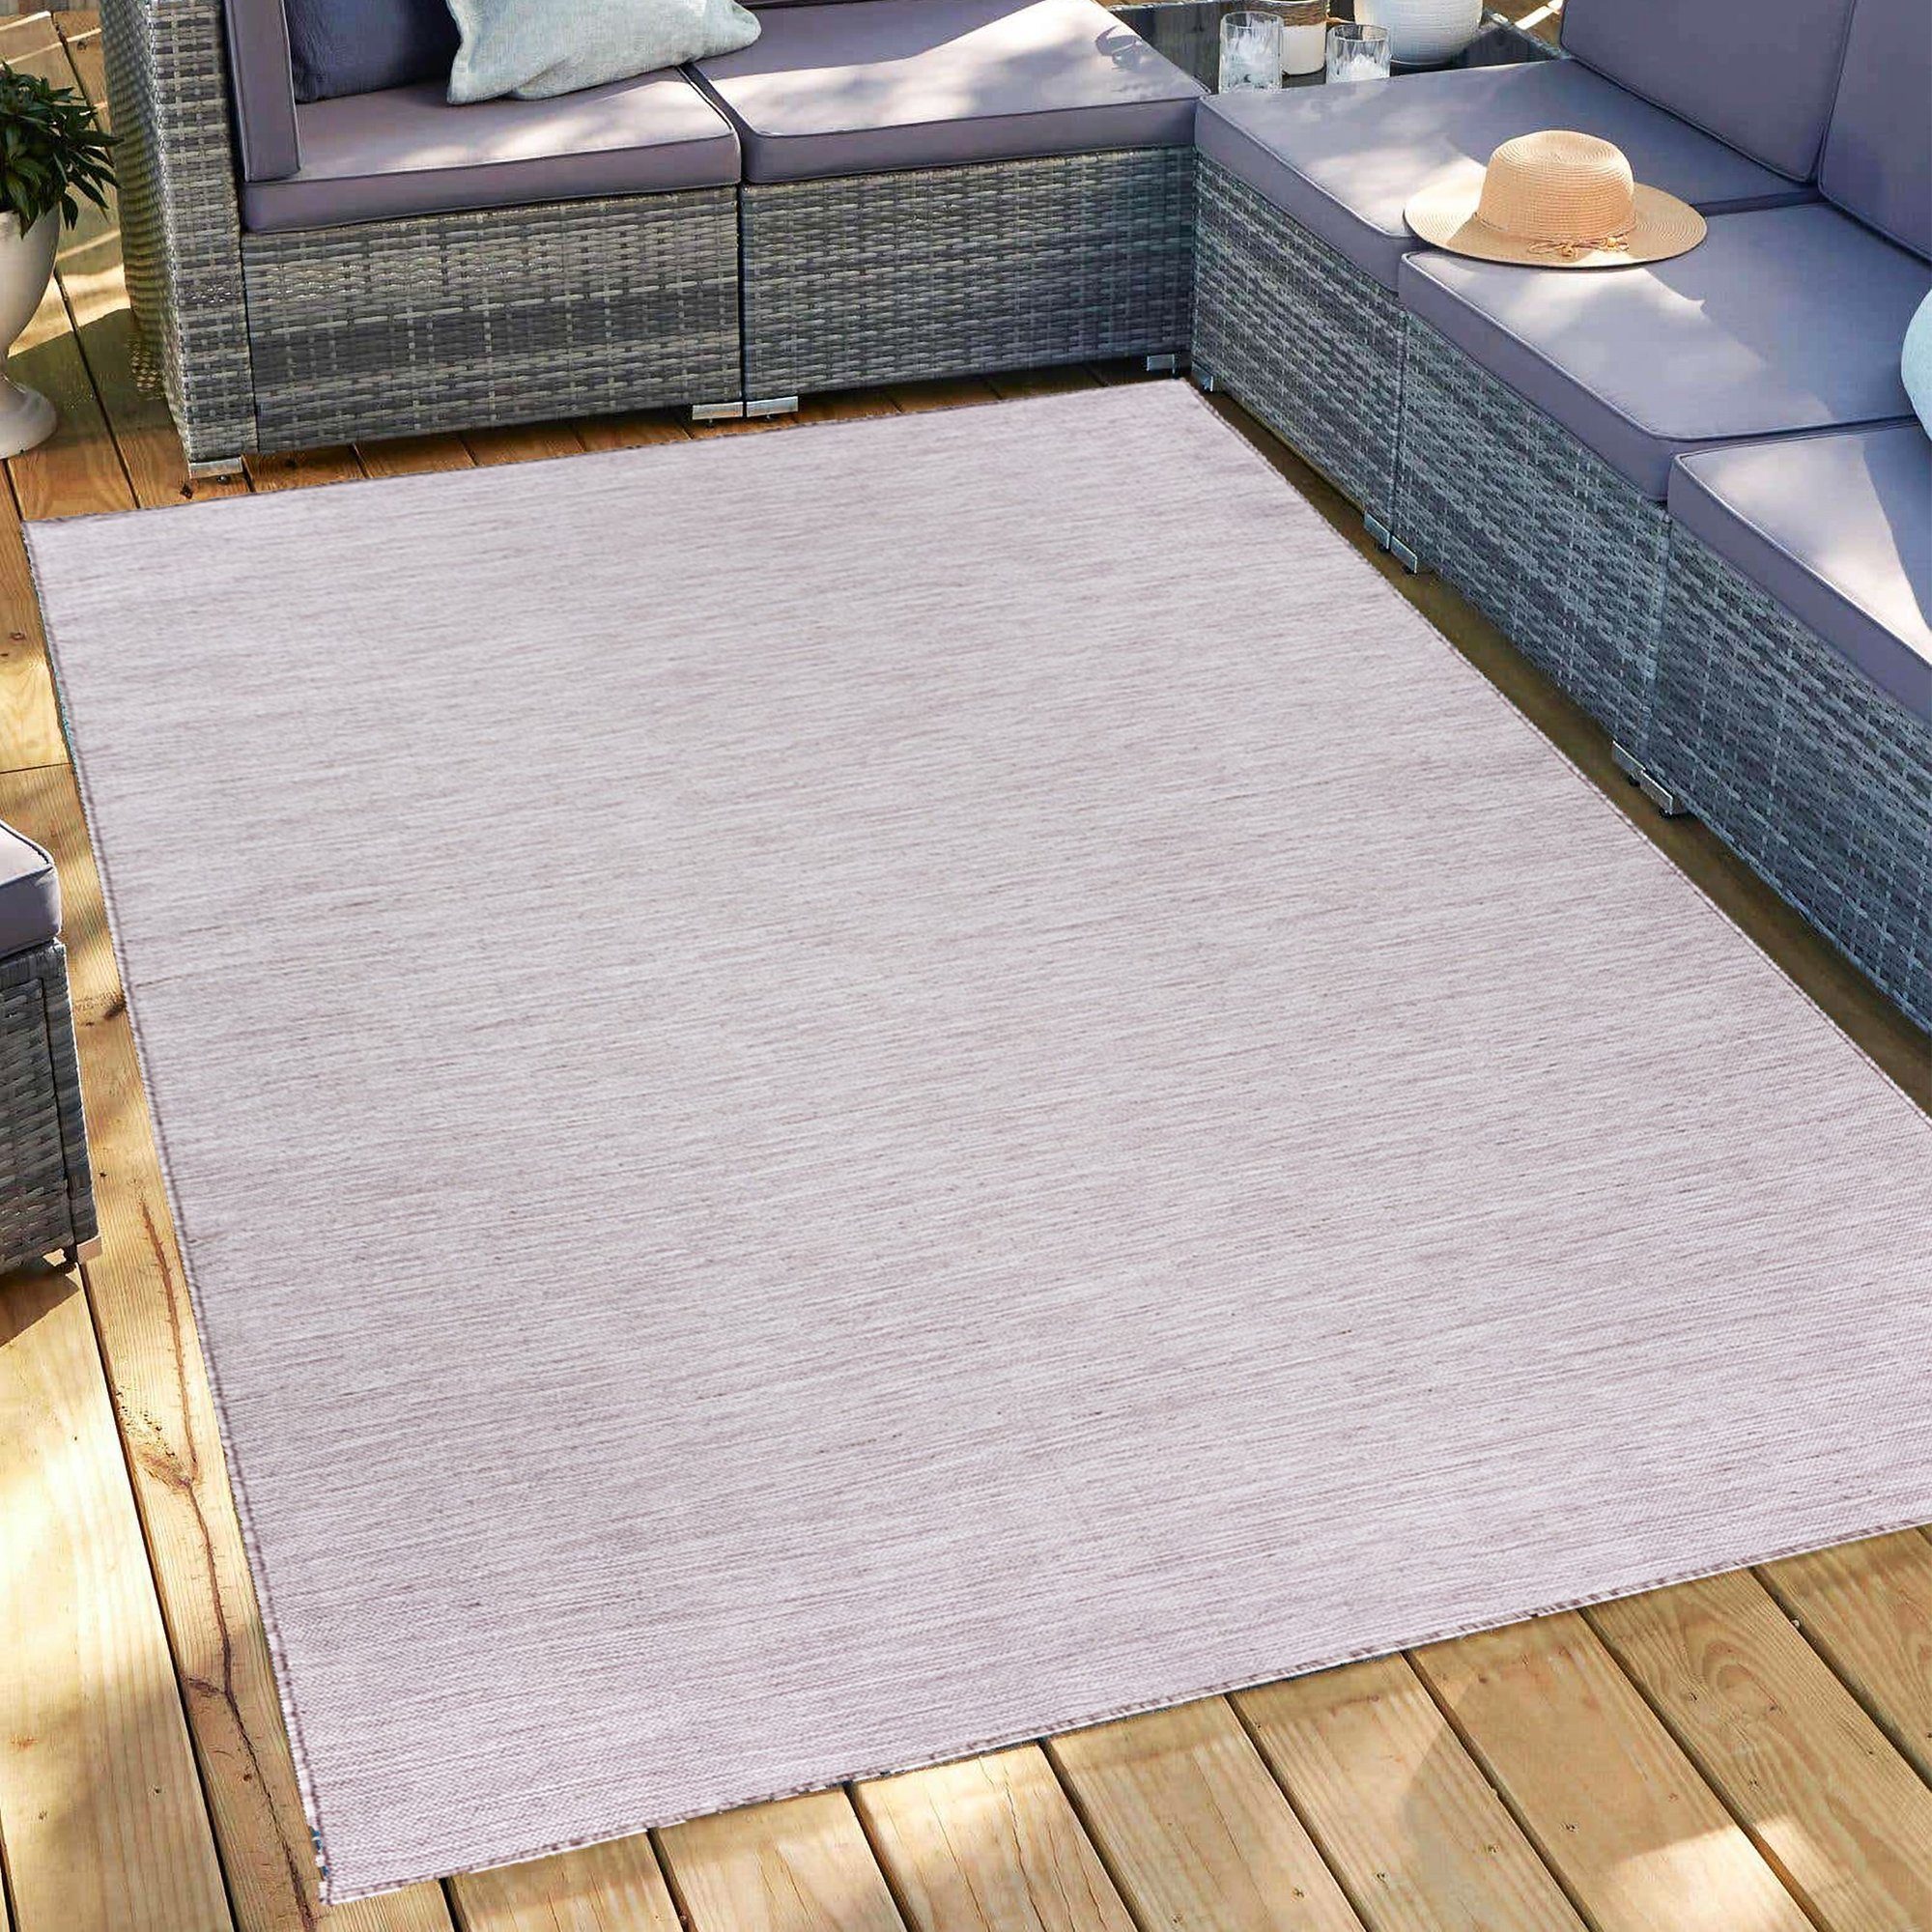 Indoor Miovani Outdoorteppich Sisal-Look Gartenteppich Teppich Pink Outdoorteppich,